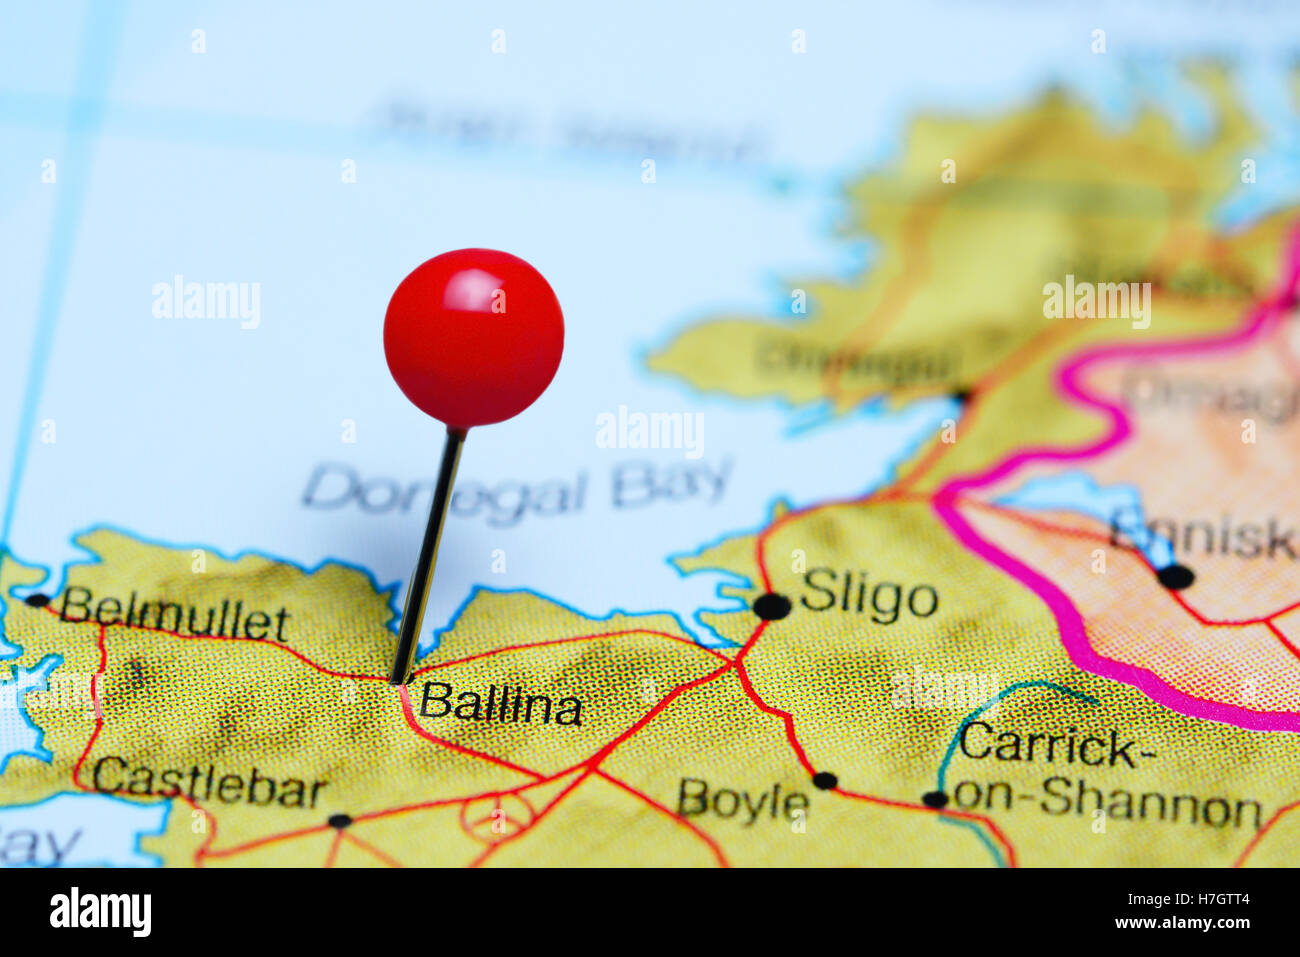 Ballina Pinned On A Map Of Ireland H7GTT4 